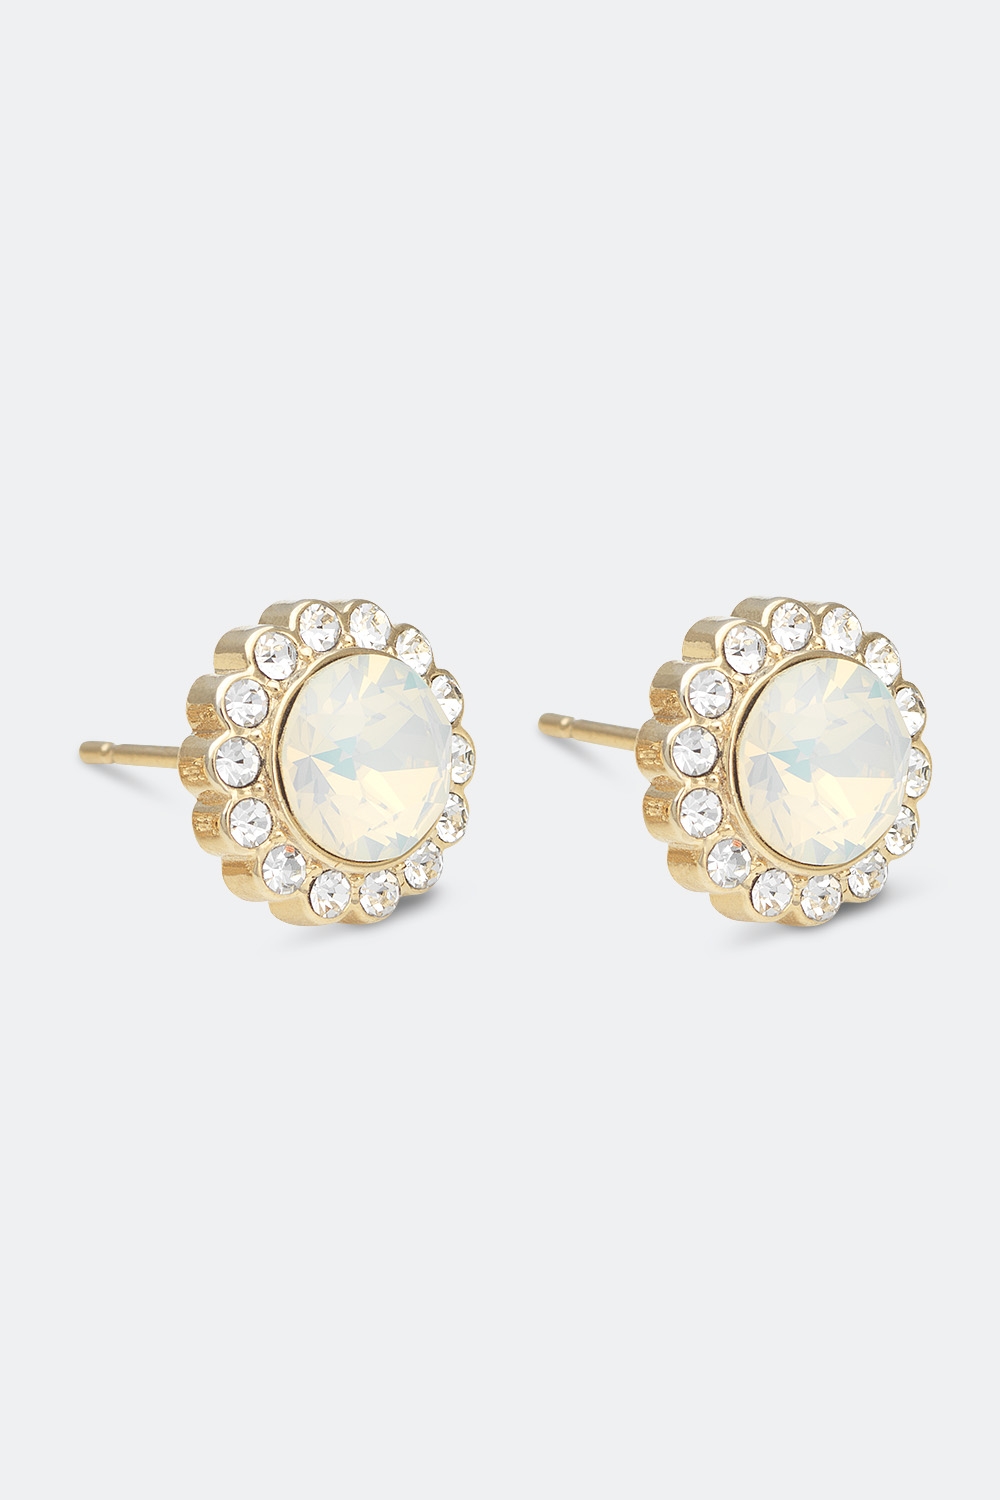 Miss Bea earrings - White opal ryhmässä Lily and Rose - Korvakorut @ Glitter (253000503102)